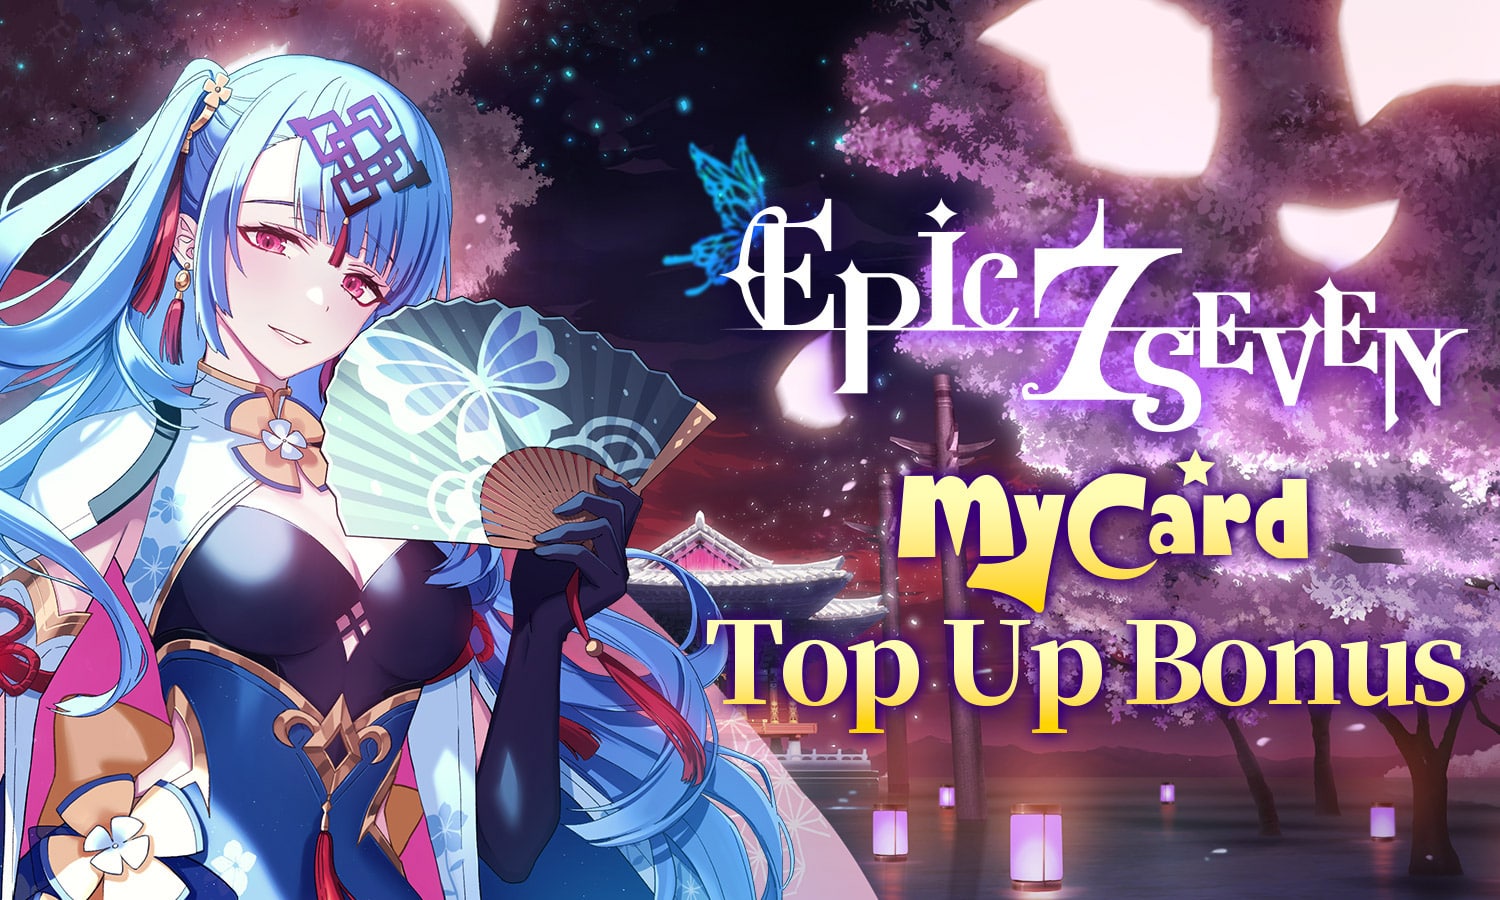   《epic 7 seven》MyCard Top Up Bonus